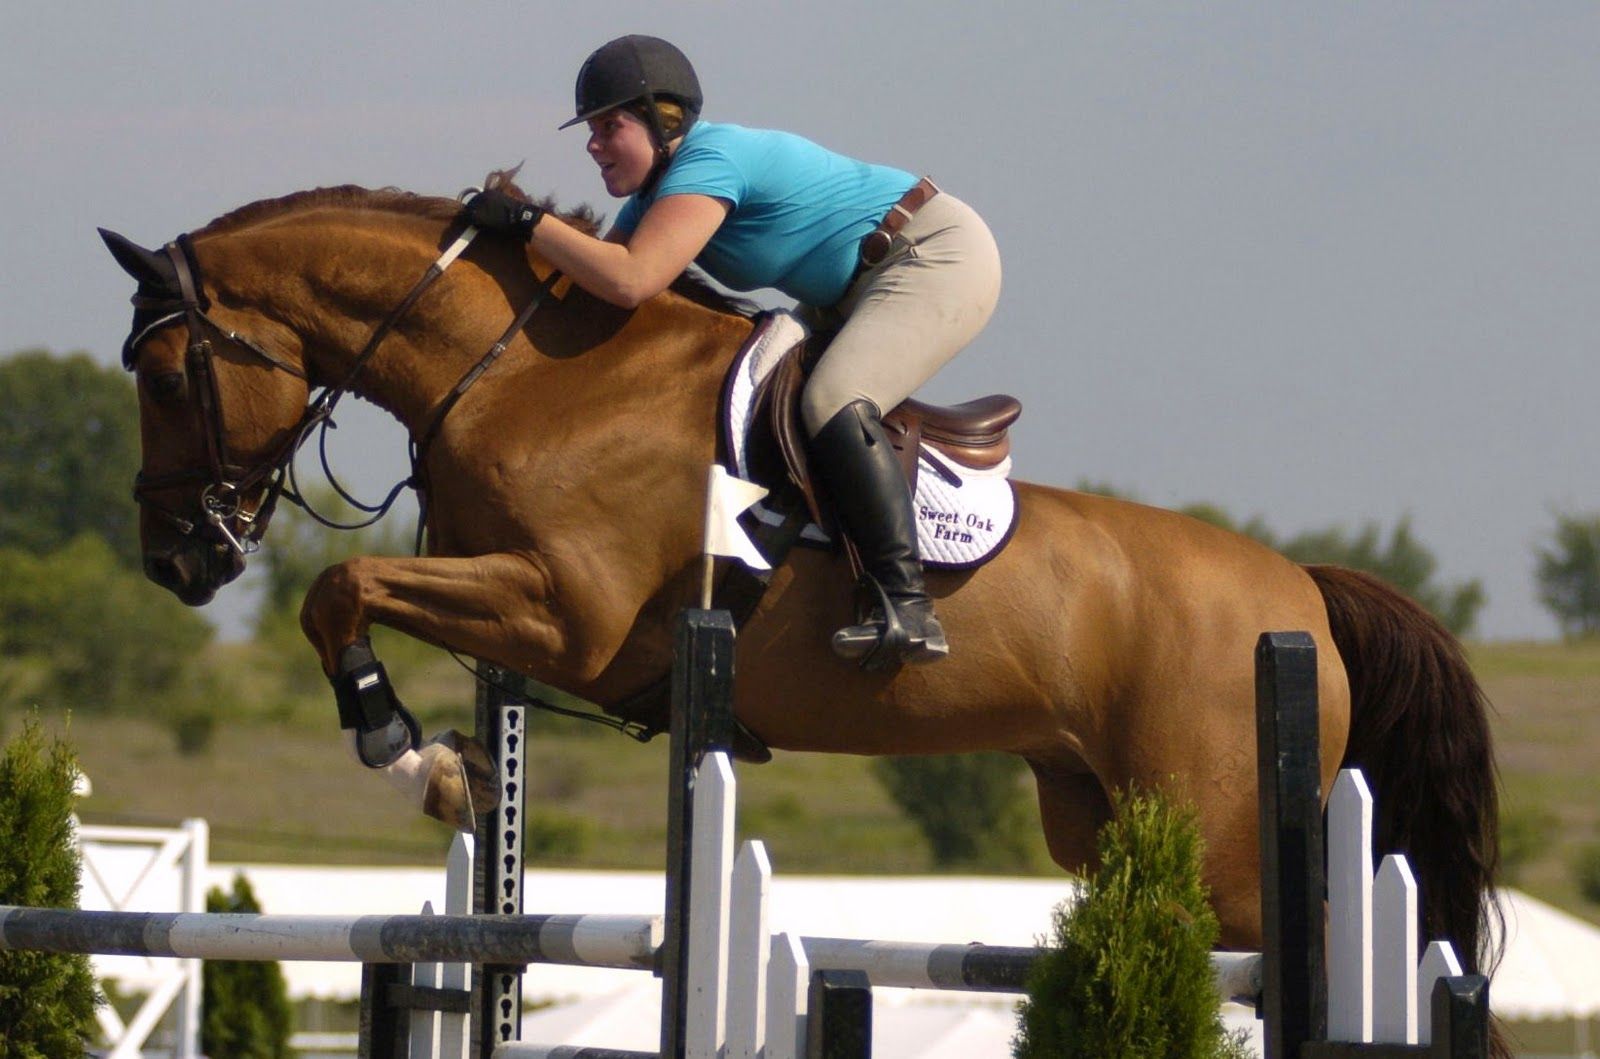 HD Animals Wallpaper: Brown Horse Jumping Wallpaper. Horse jumping, Horses, Show jumping horses